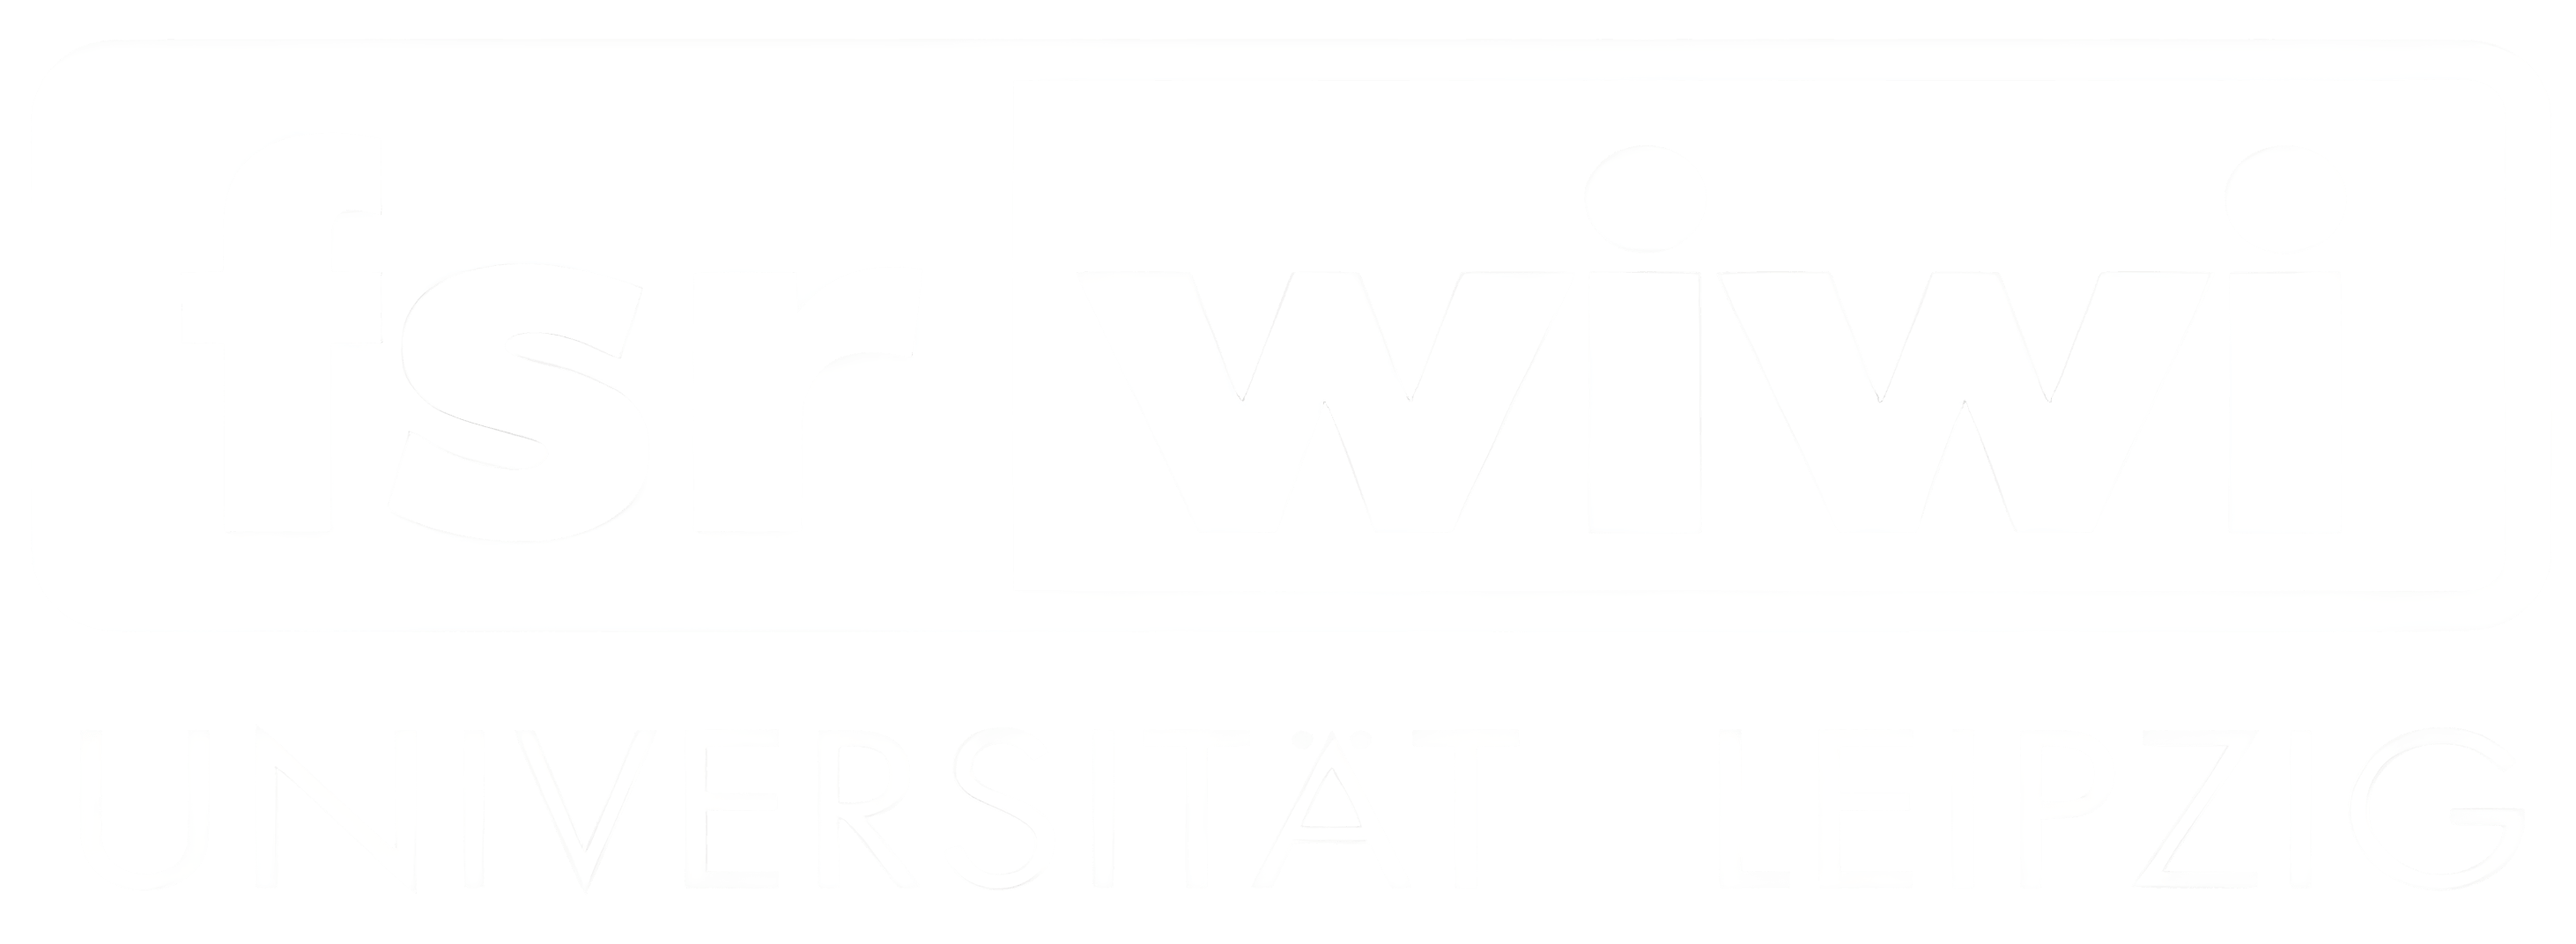 fsr-wiwi-transparent